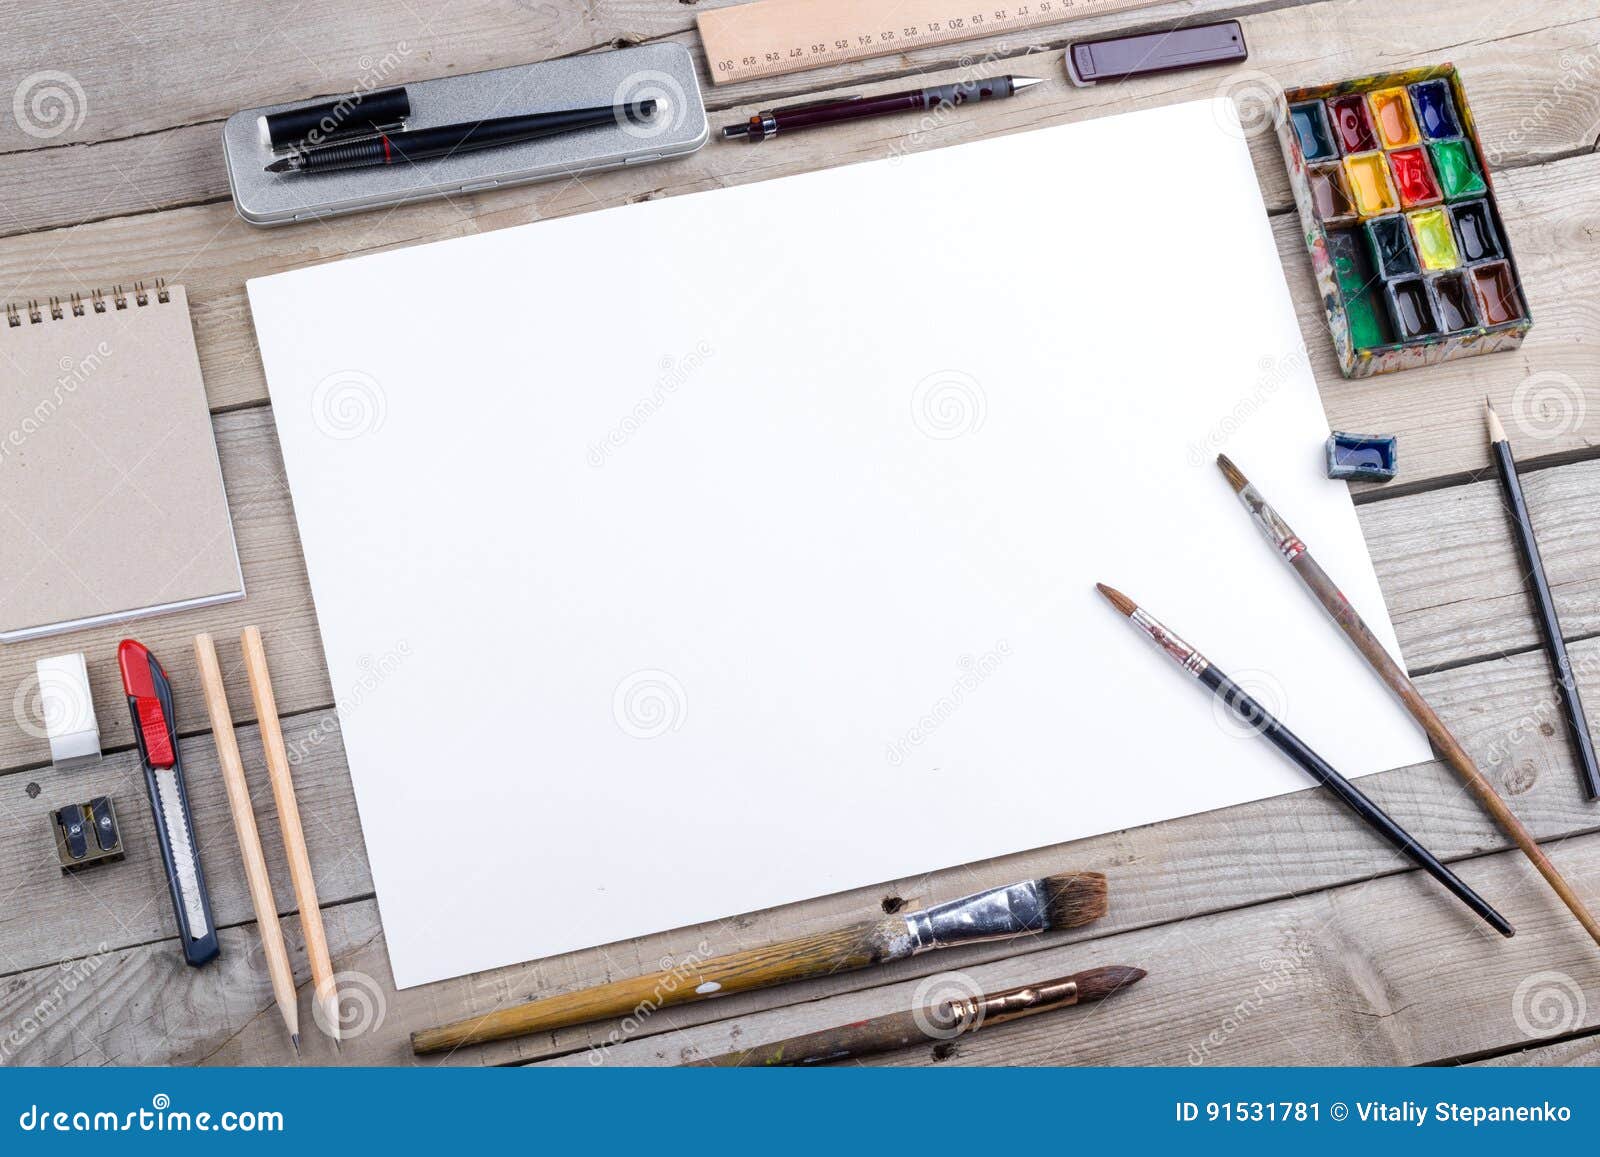 artist, illustrator or calligrapher workplace